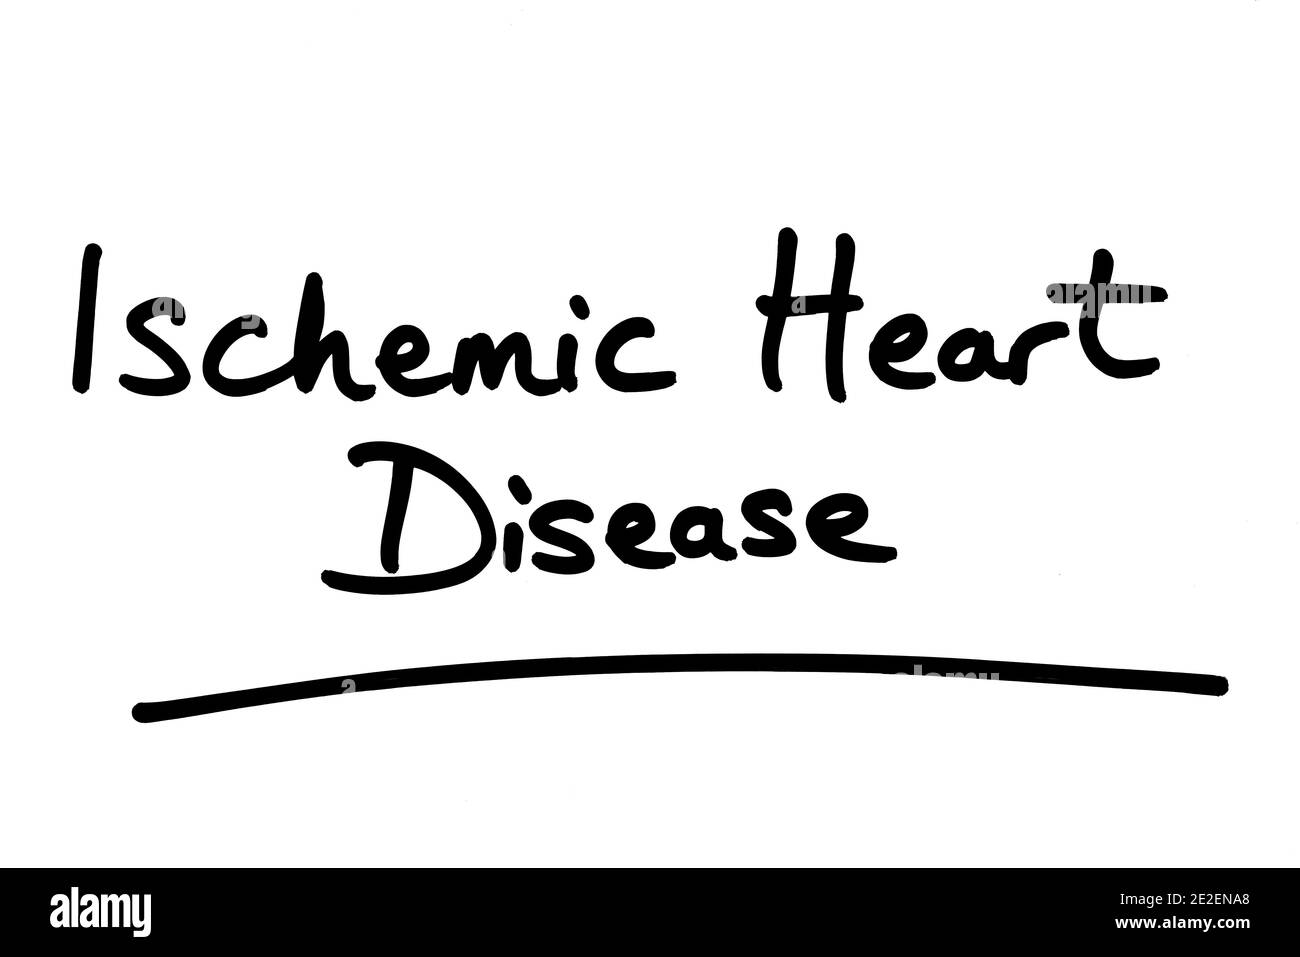 Ischemic Heart Disease handwritten on a white background. Stock Photo